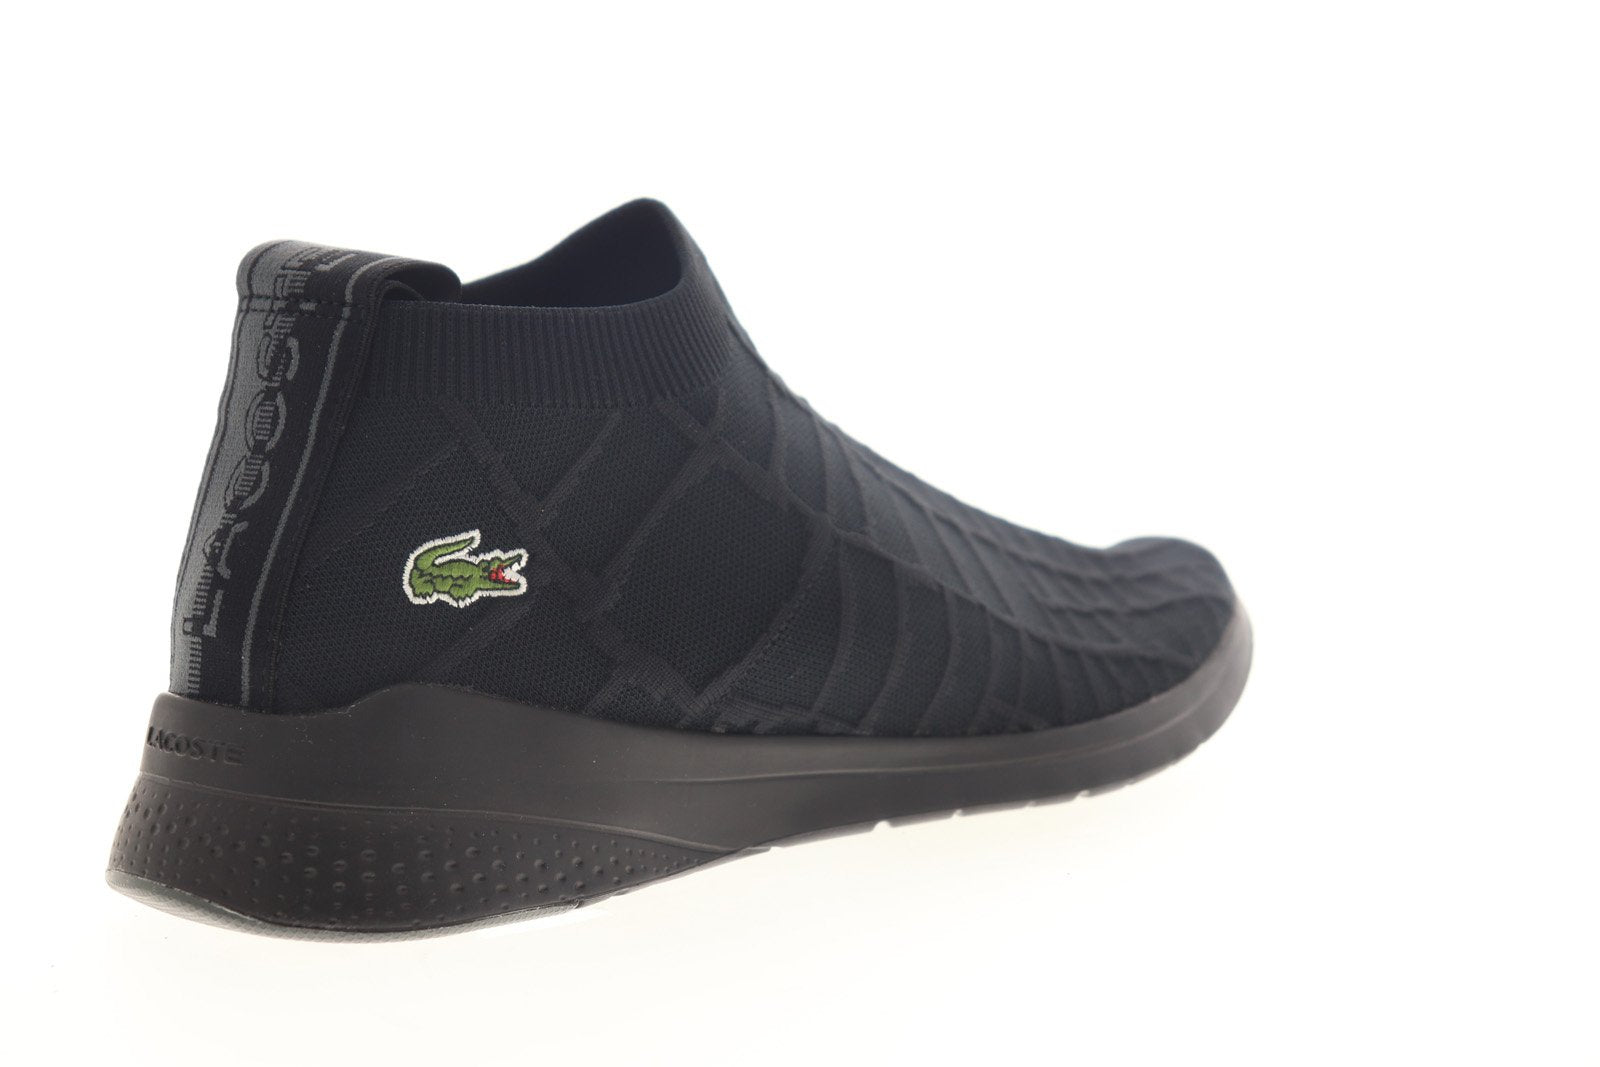 Descent projektor maling Lacoste LT Fit Sock 319 1 SMA Mens Black Canvas Slip On Lifestyle Snea -  Ruze Shoes